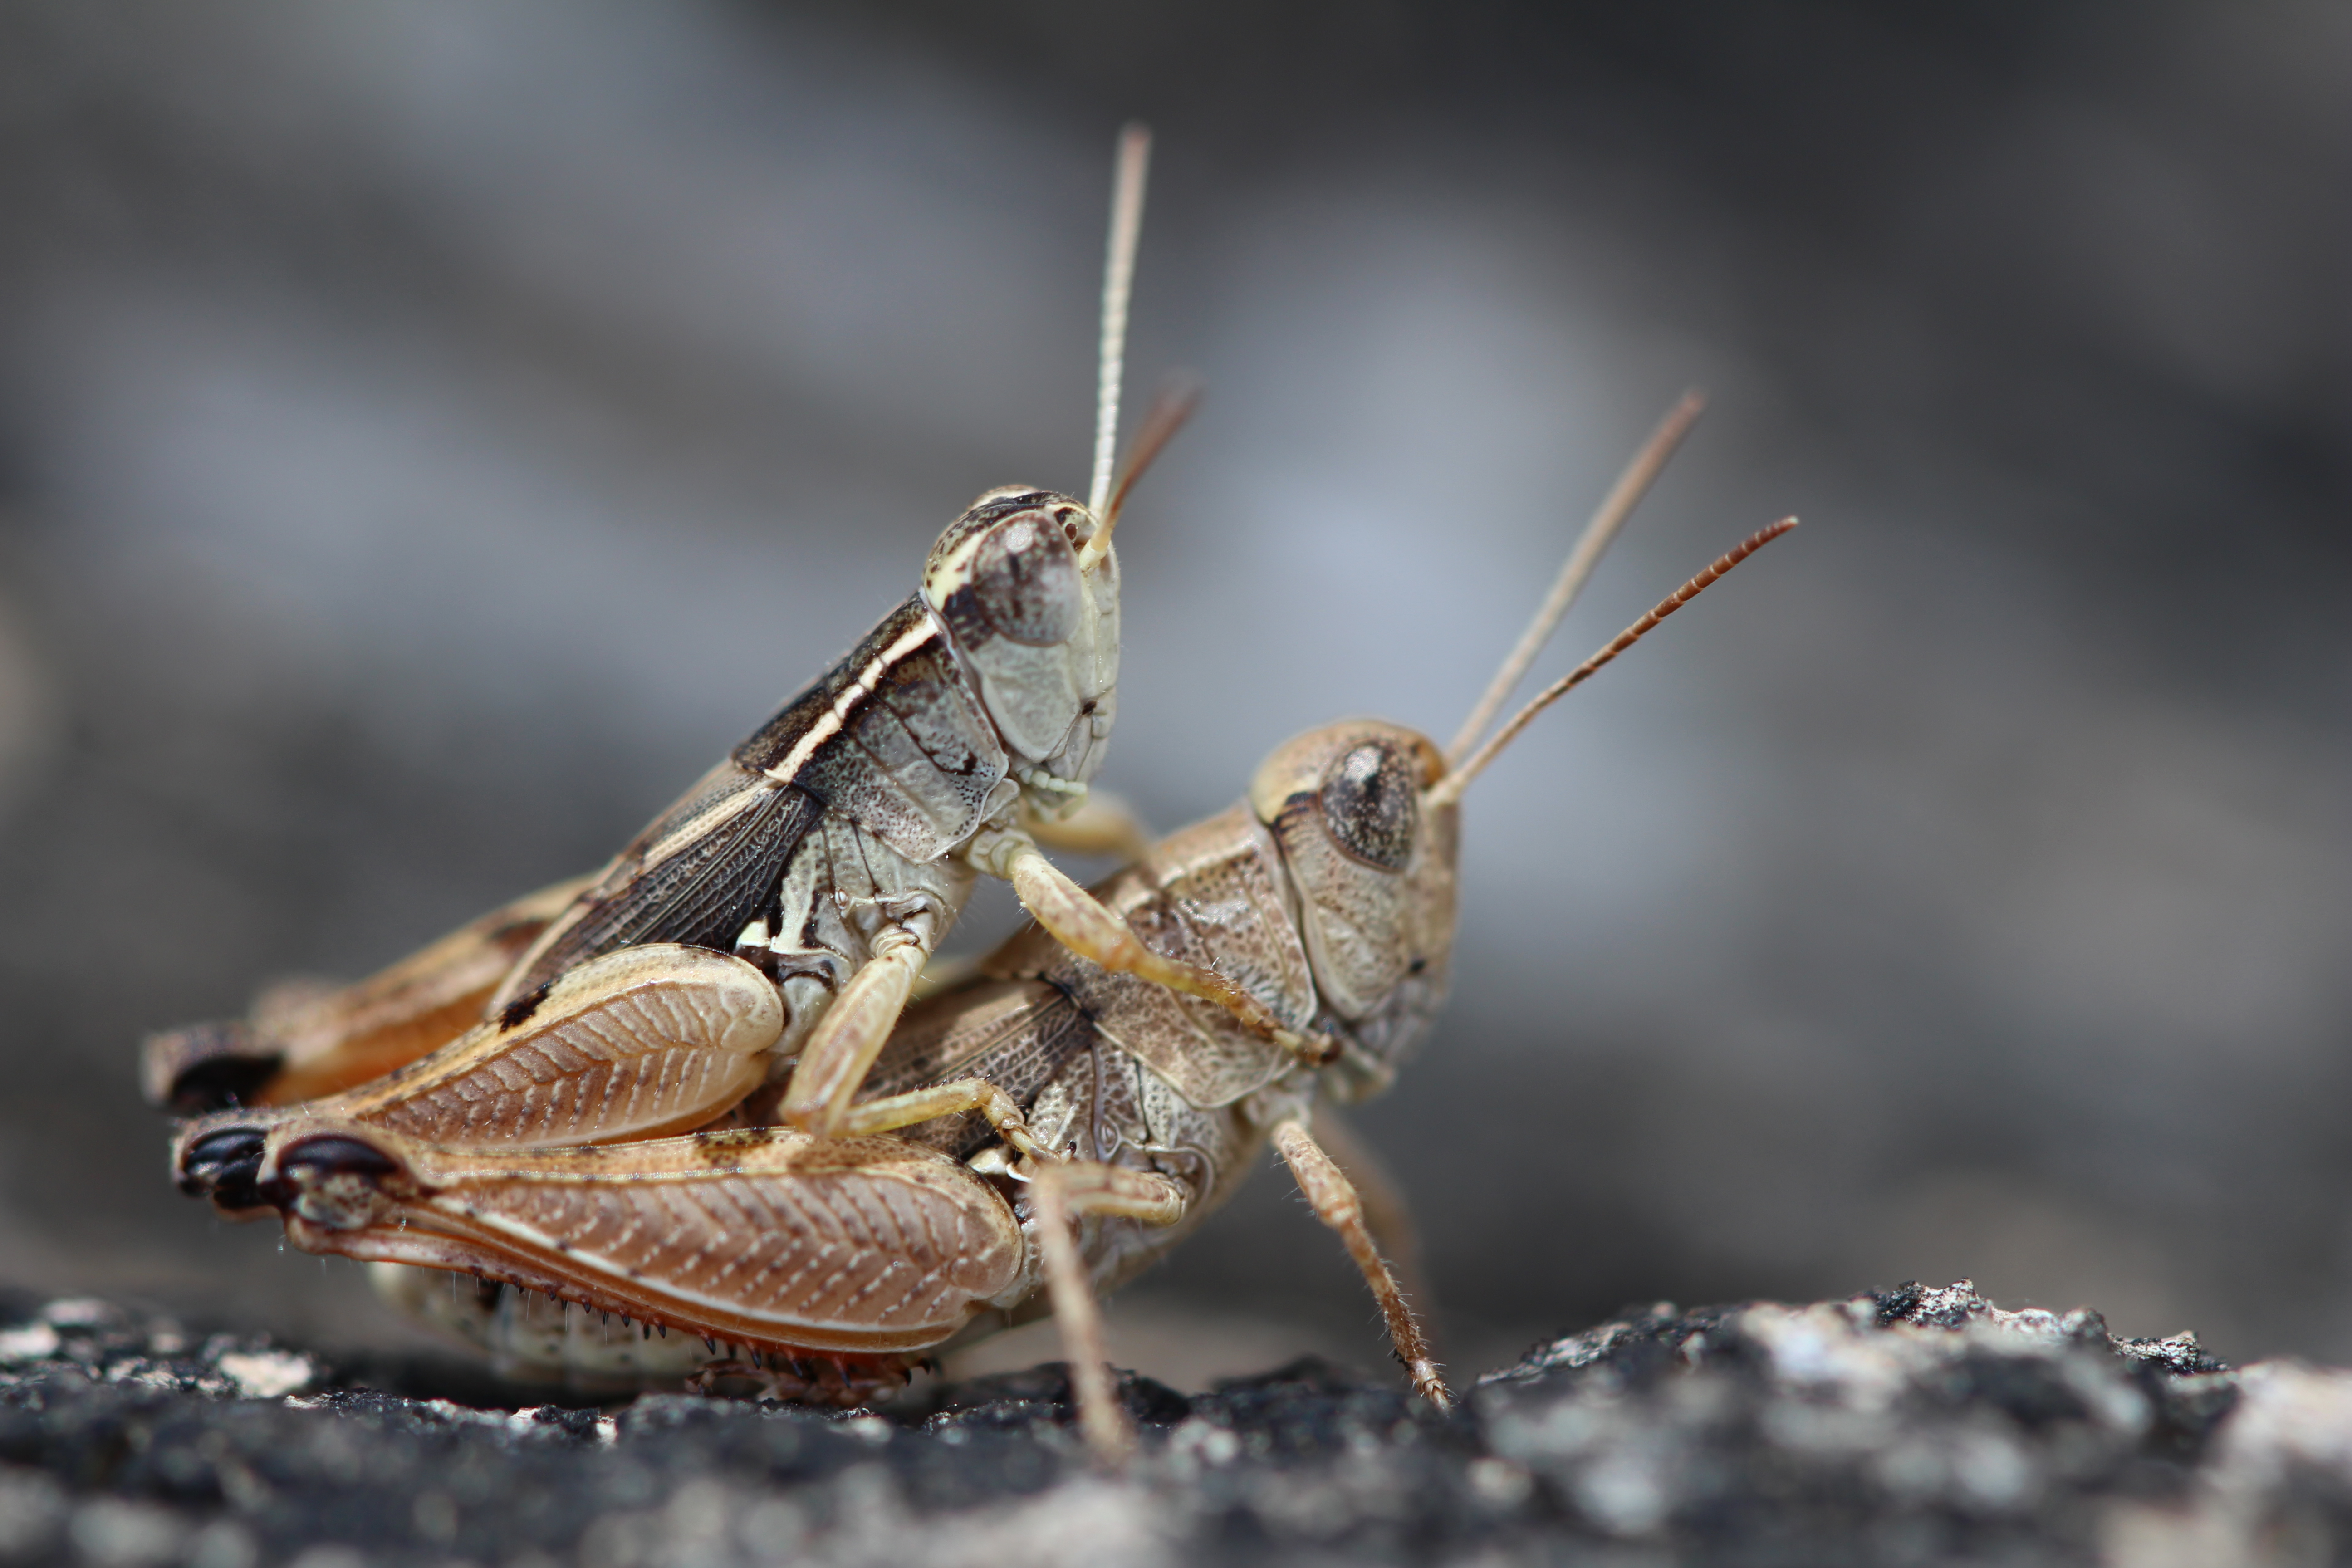 Wingless grasshoppers' future looks assured. Image by Sonu Yadev